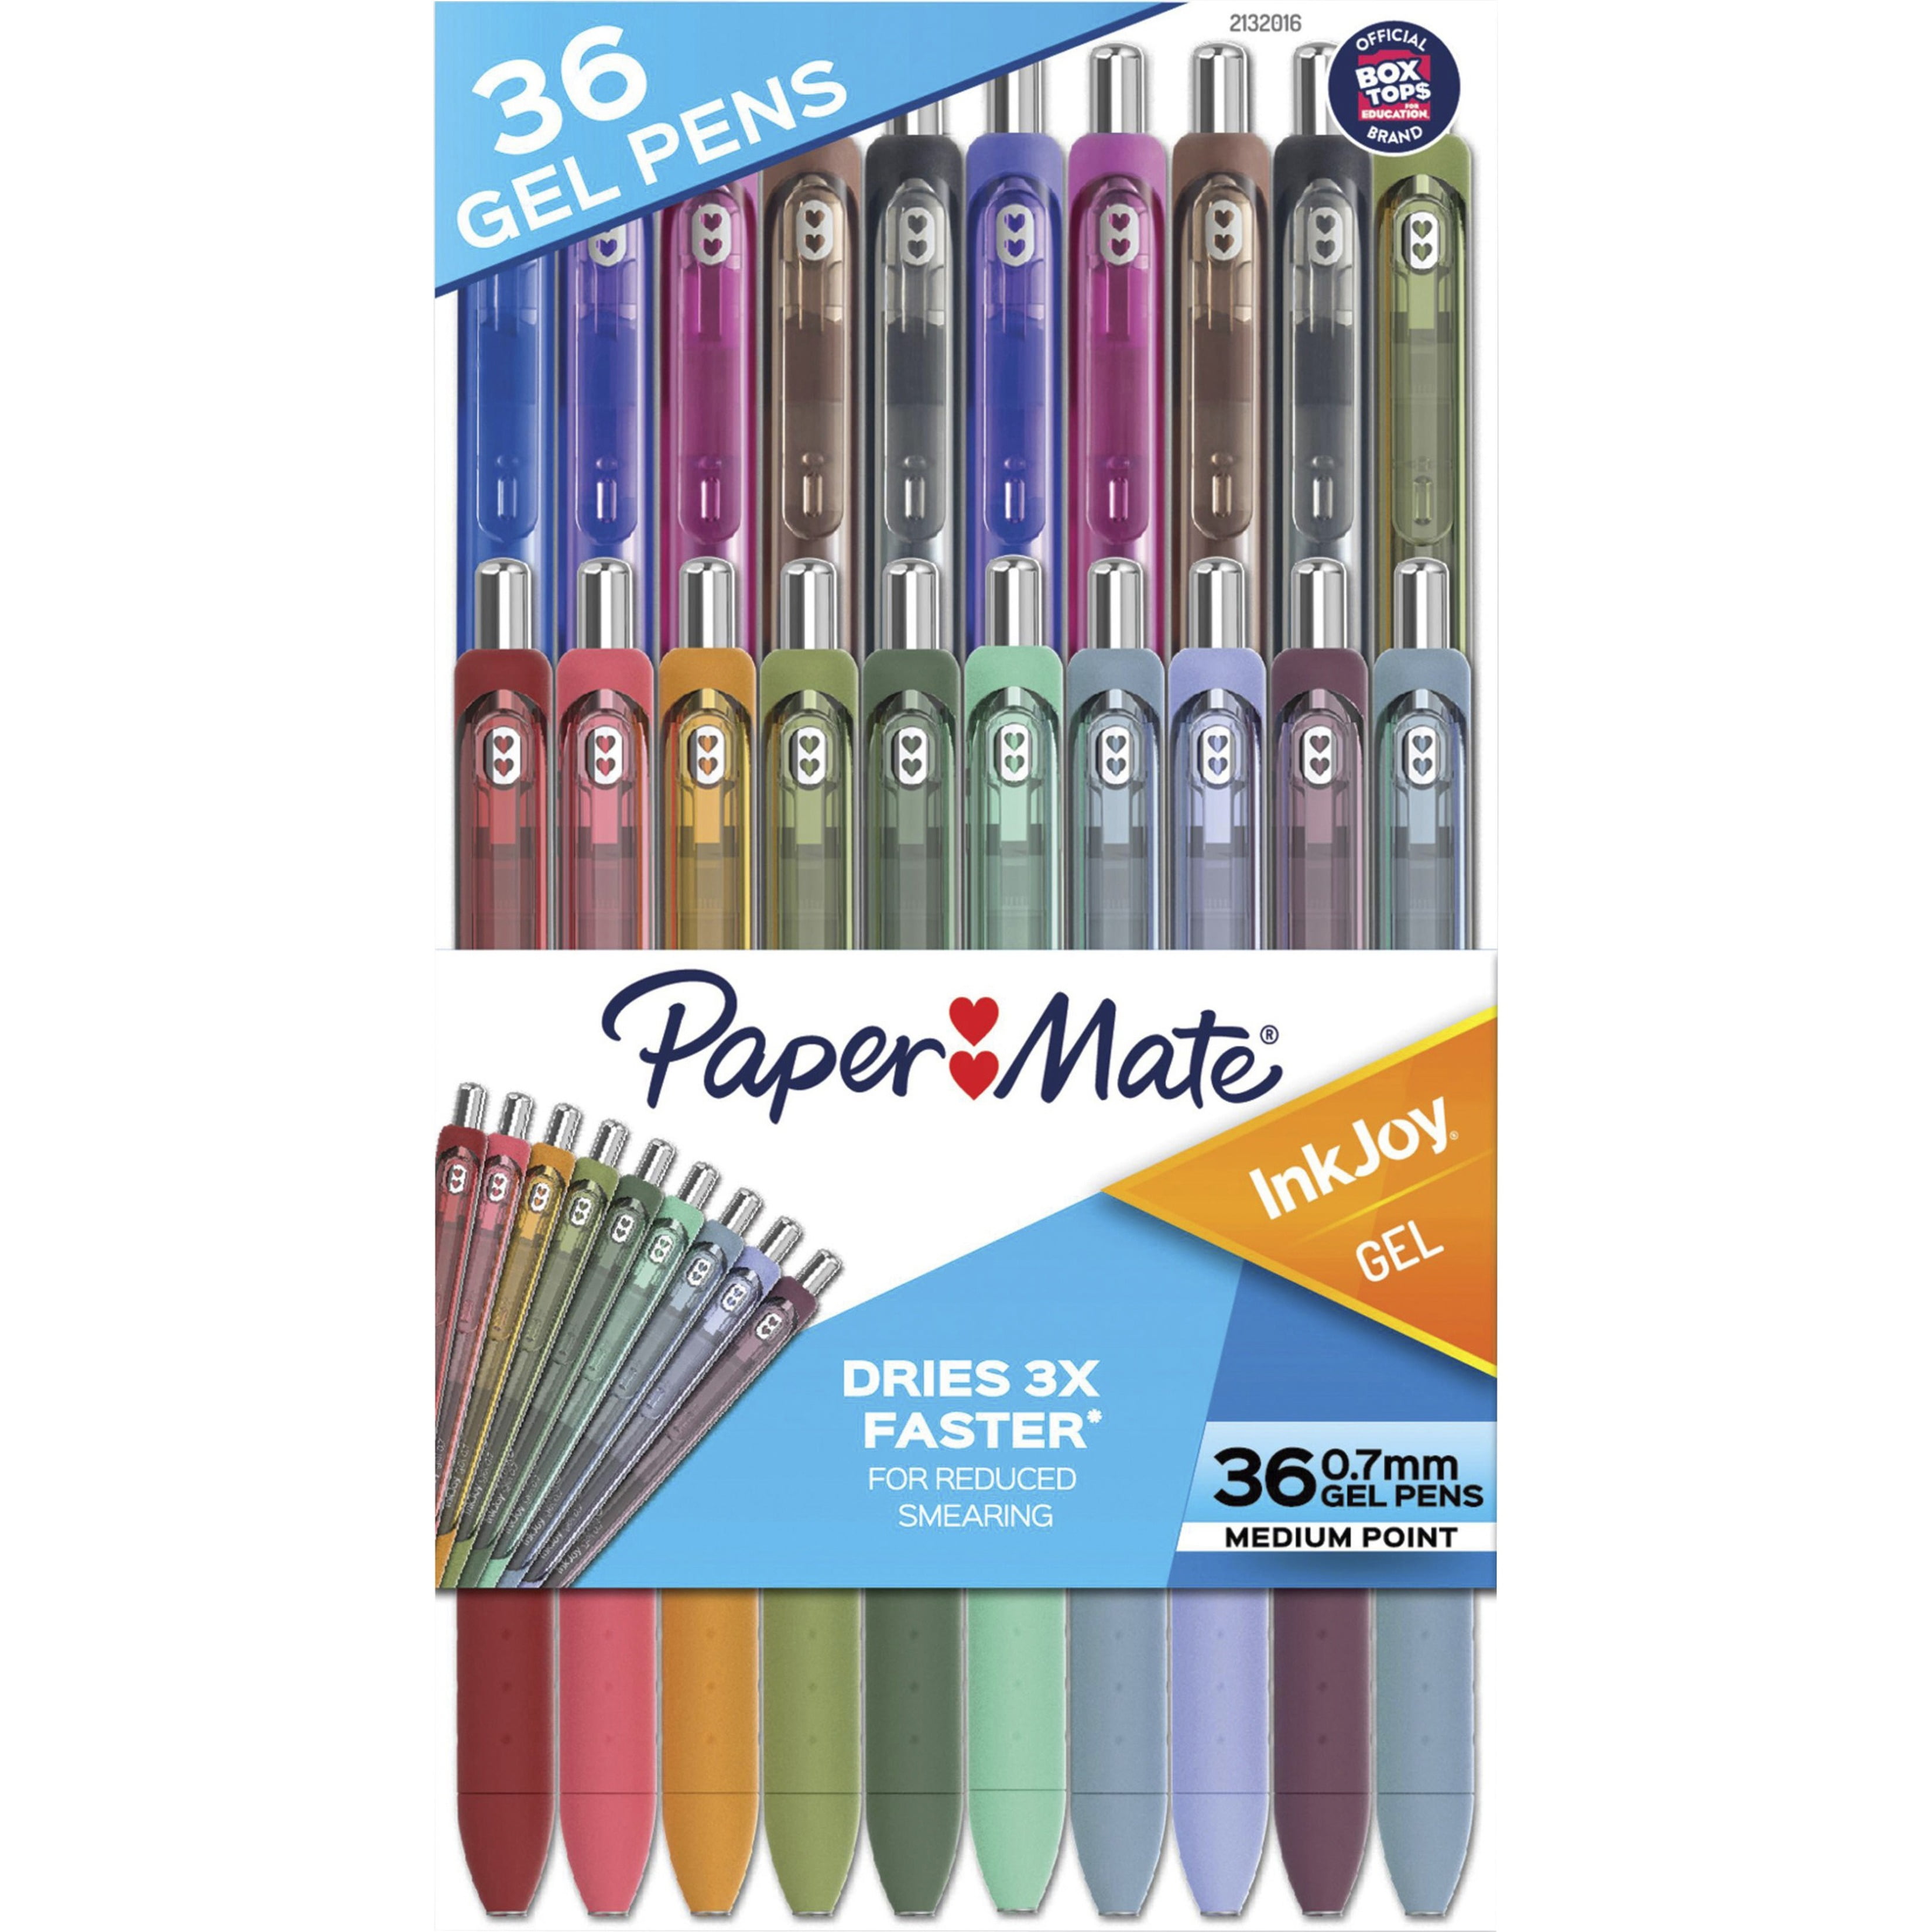 Paper Mate InkJoy Gel Pens Medium Sized Nib 0.7mm Adult Colouring Gift Set  Pack